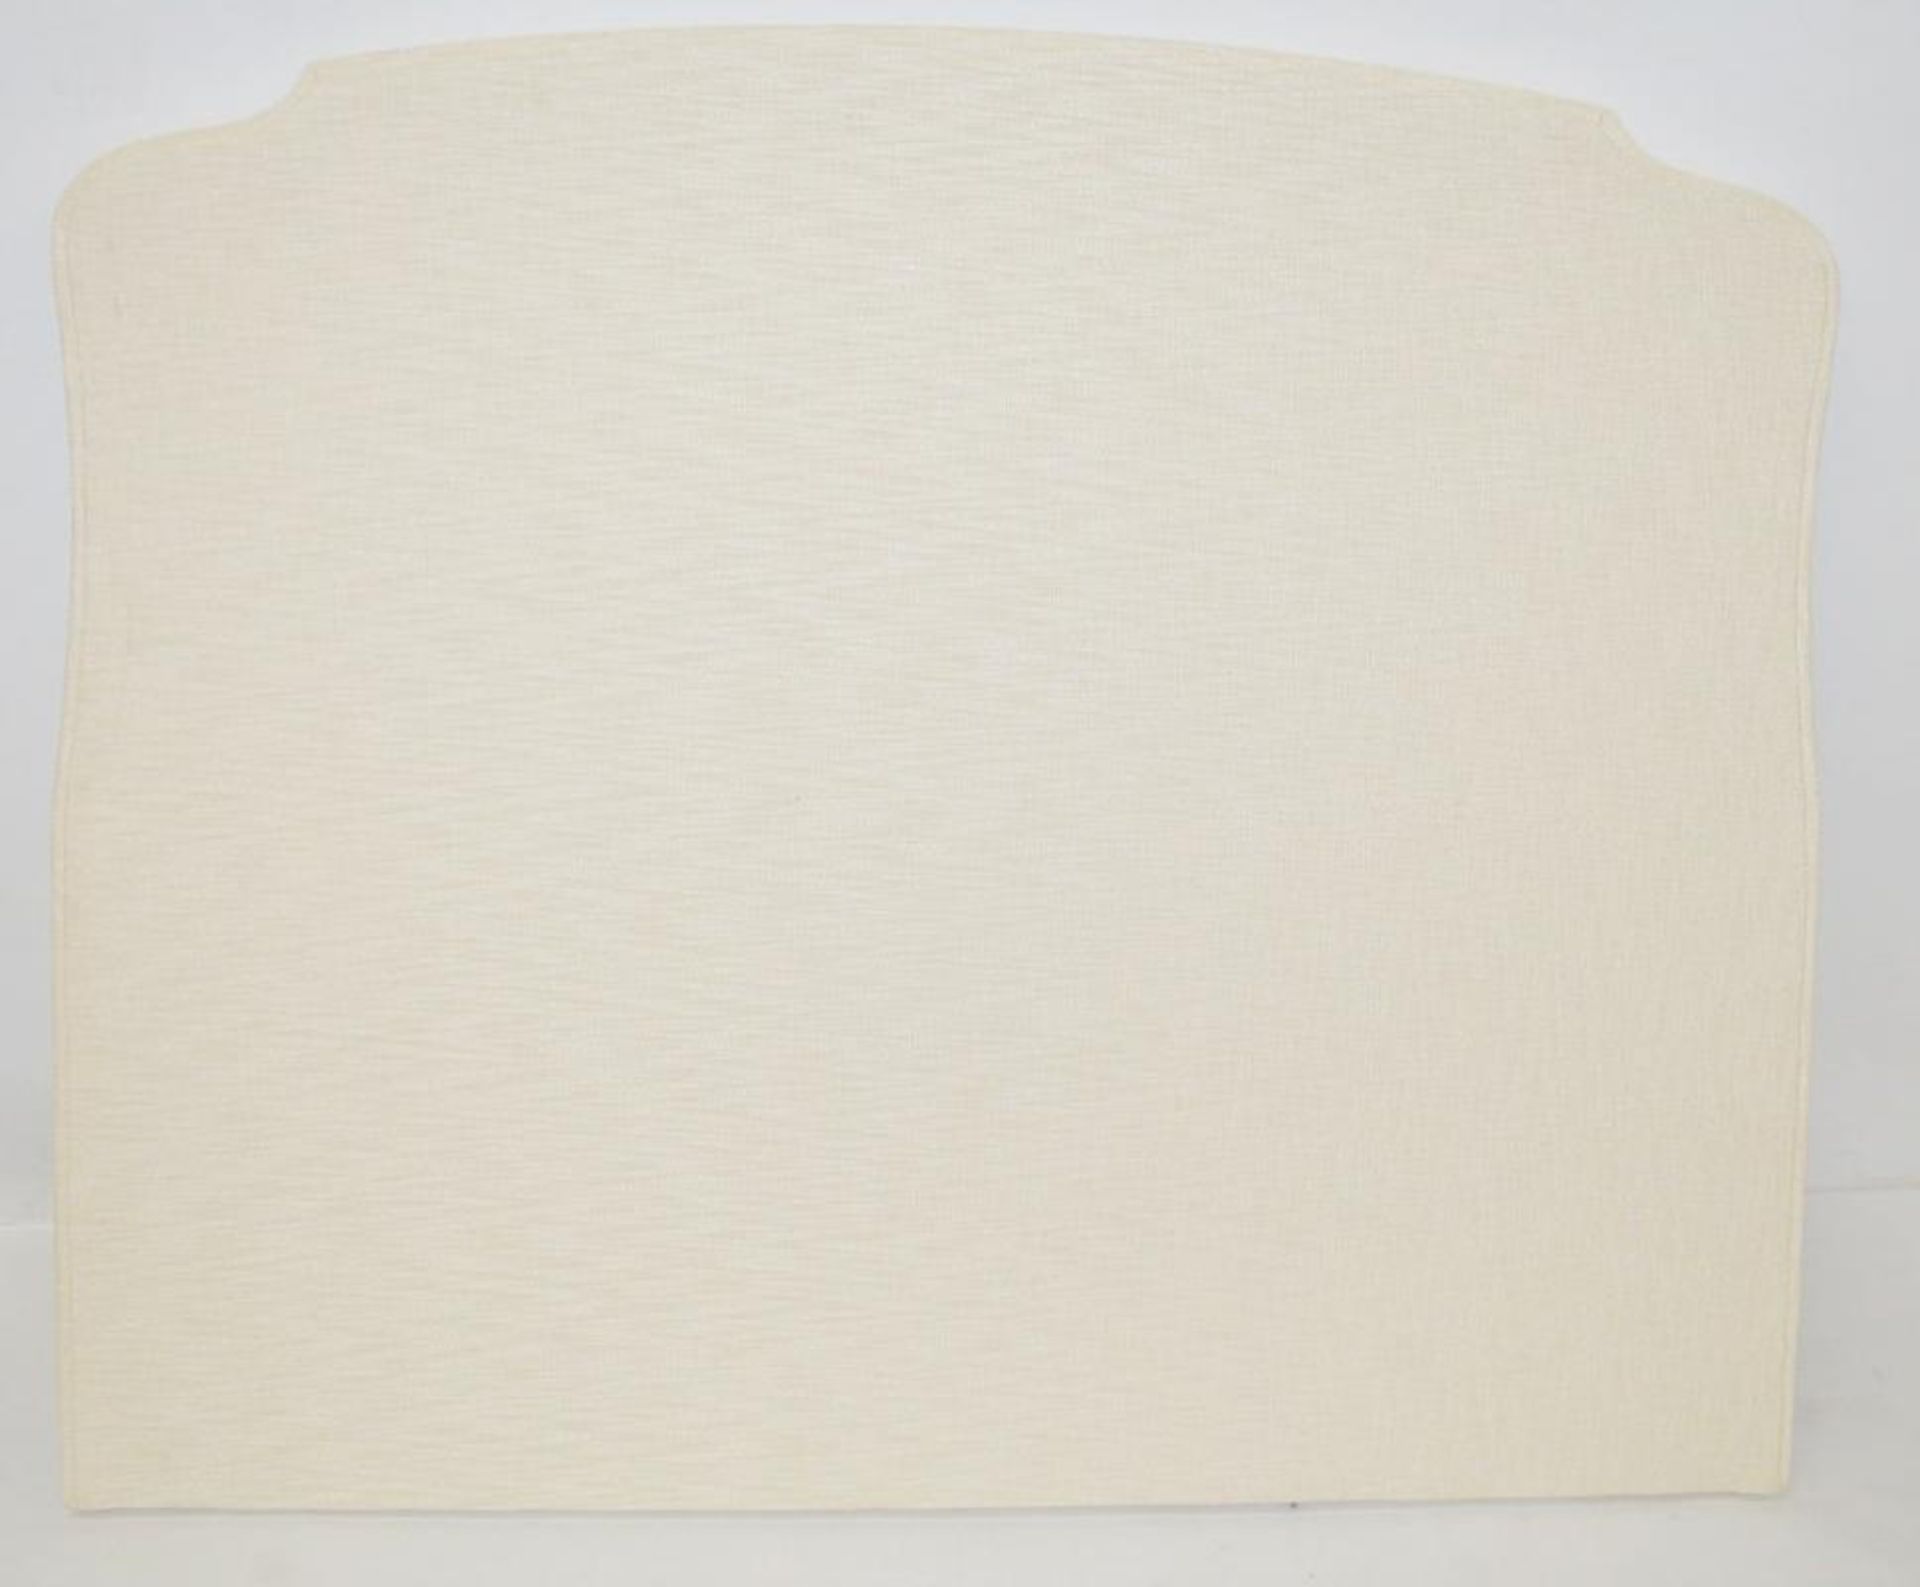 1 x VISPRING 'Eccleston' Luxury King Size Upholsted Headboard In A Premium Light Cream Fabric - Hand - Image 3 of 5